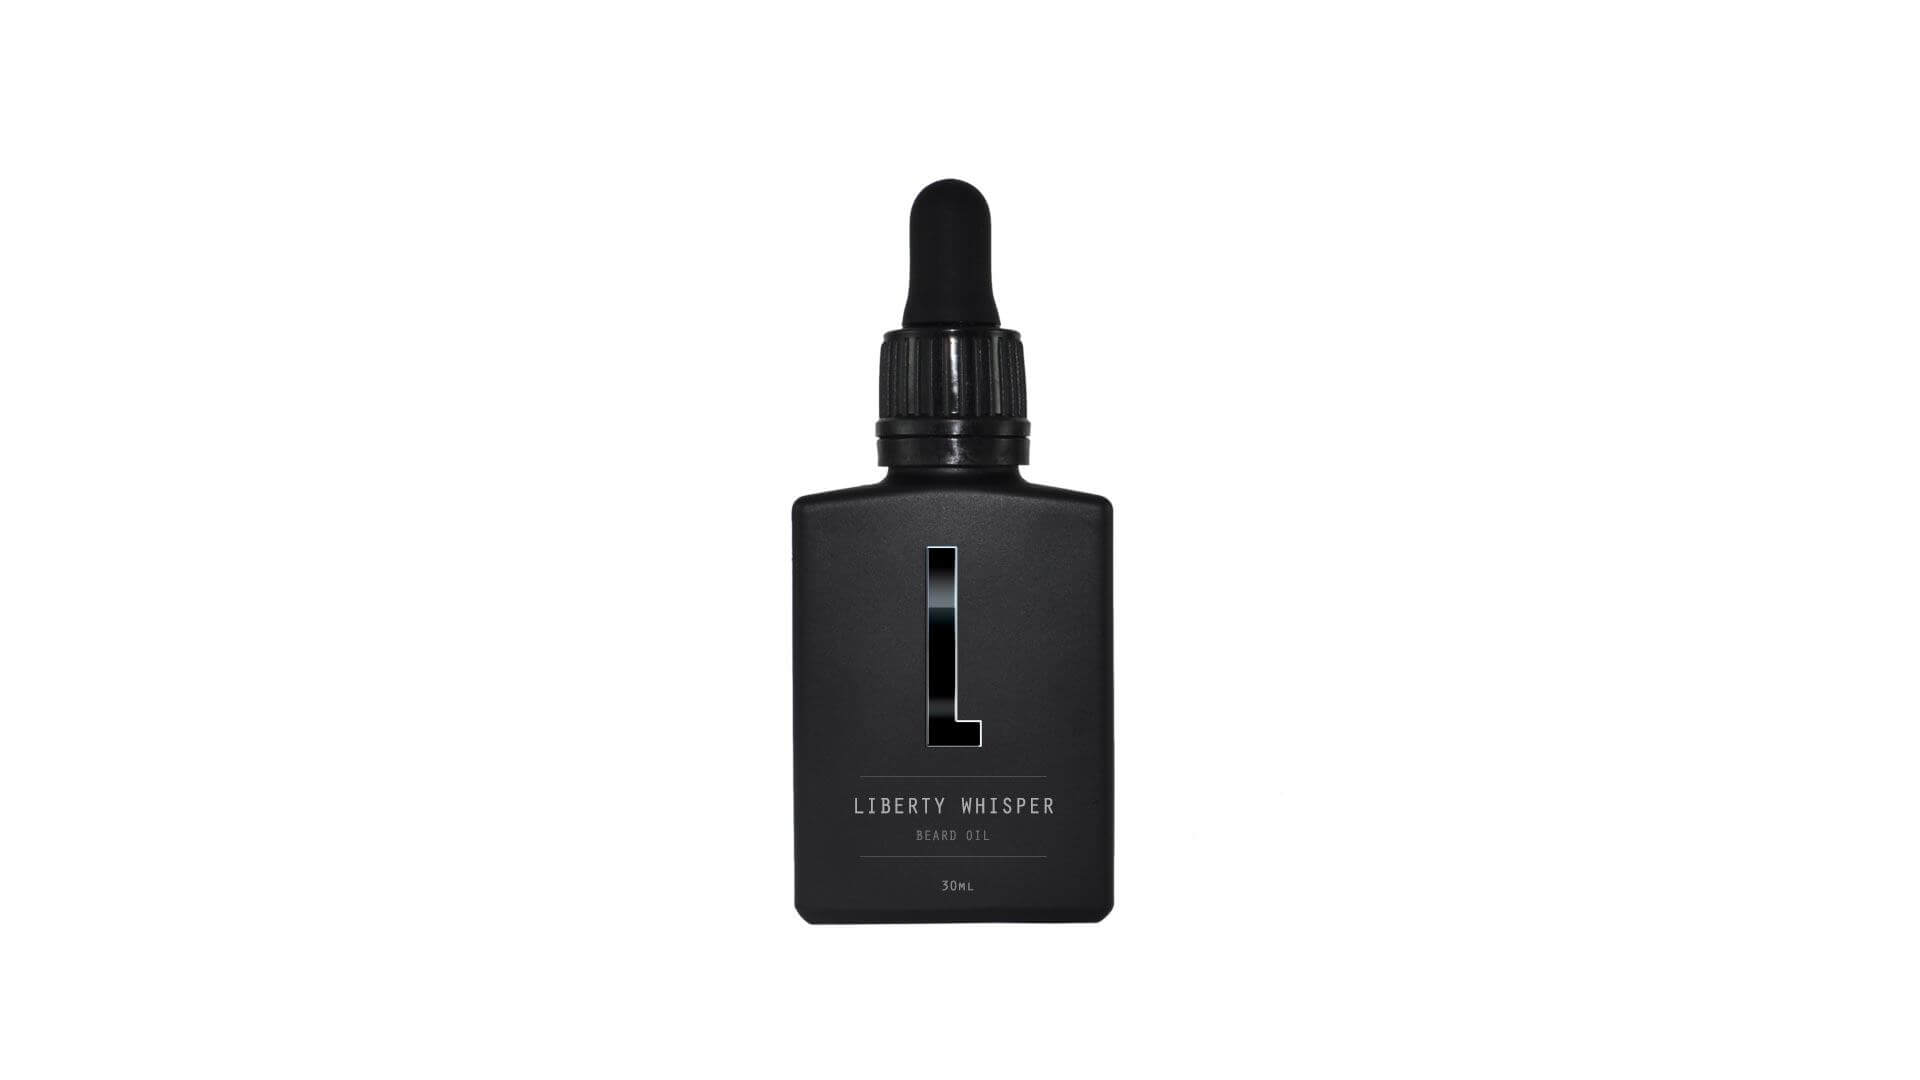 Single bottle of Liberty Whisper Beard Oil - Premium beard care oil from Beardifulman